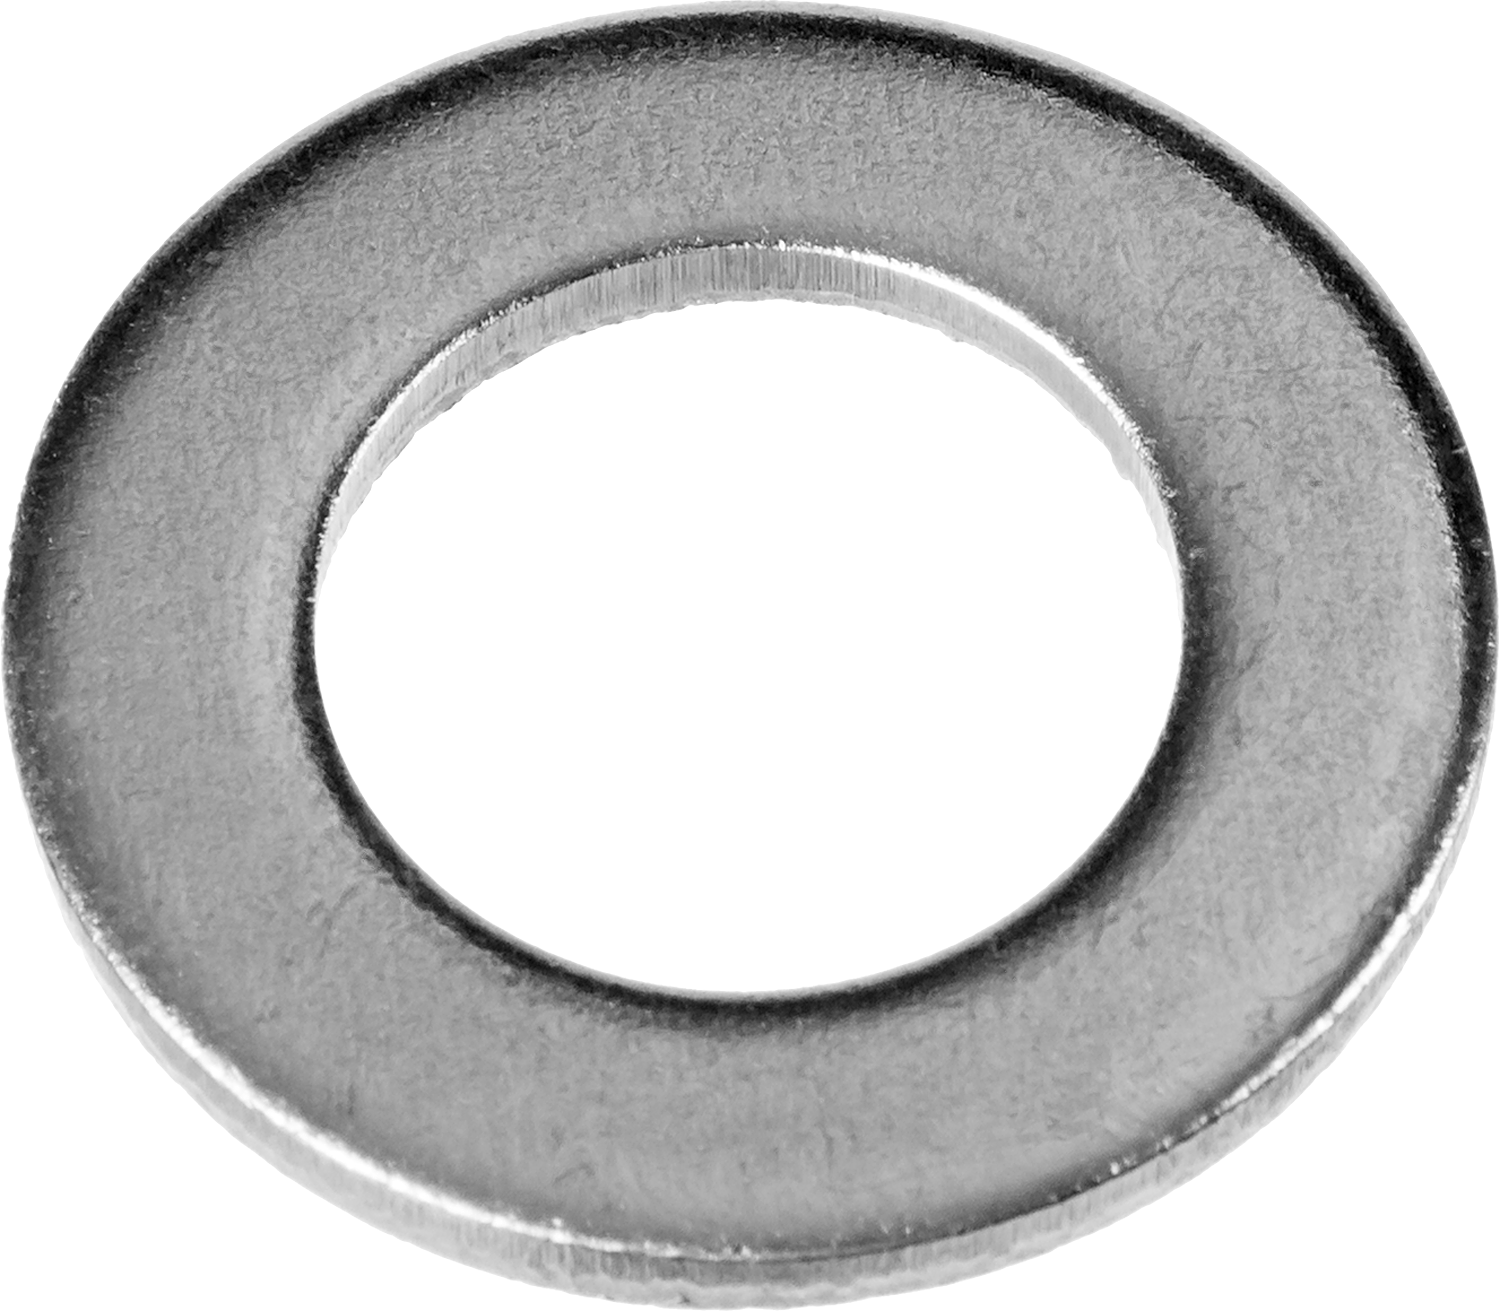 Шайба Зубр 303806-05, 125А DIN, 5 мм, оцинкованная сталь, 90 шт., фасовка (303806-05)